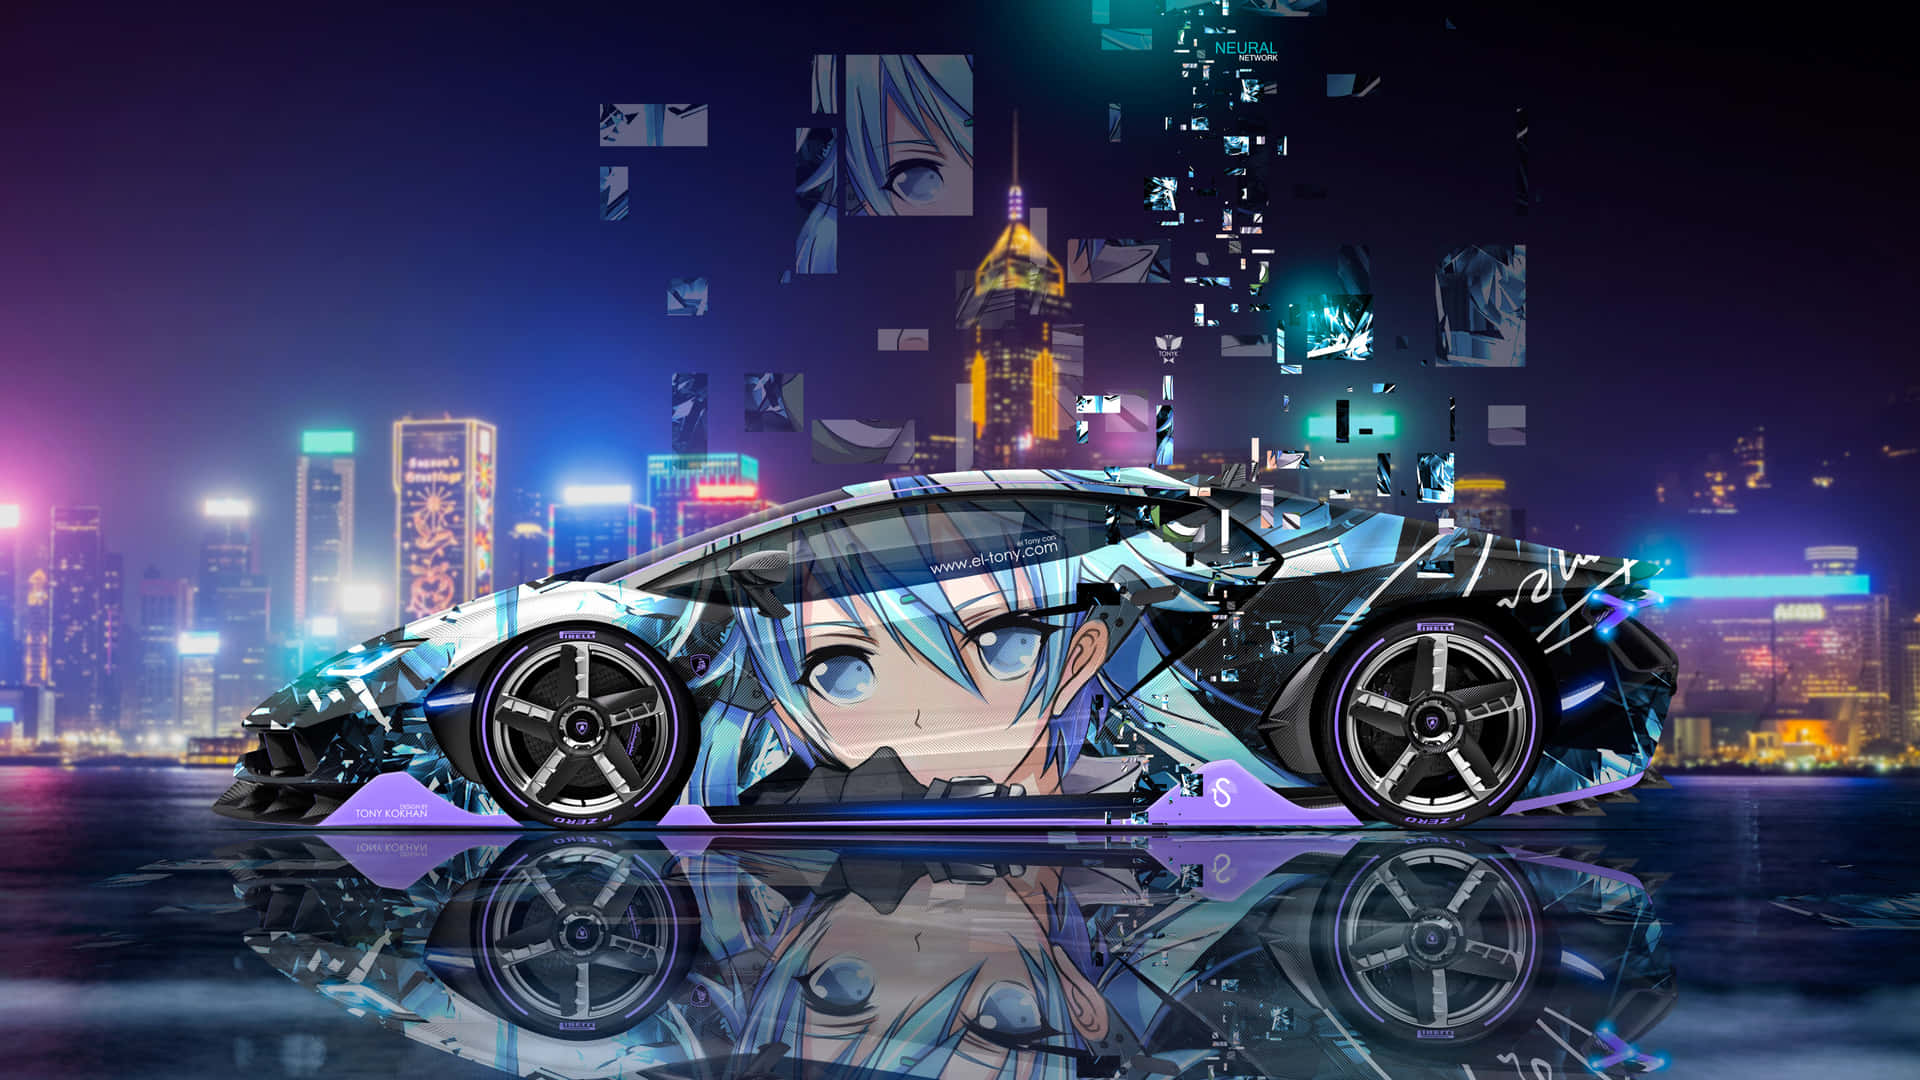 "A powerful anime car, ready to race through the night."